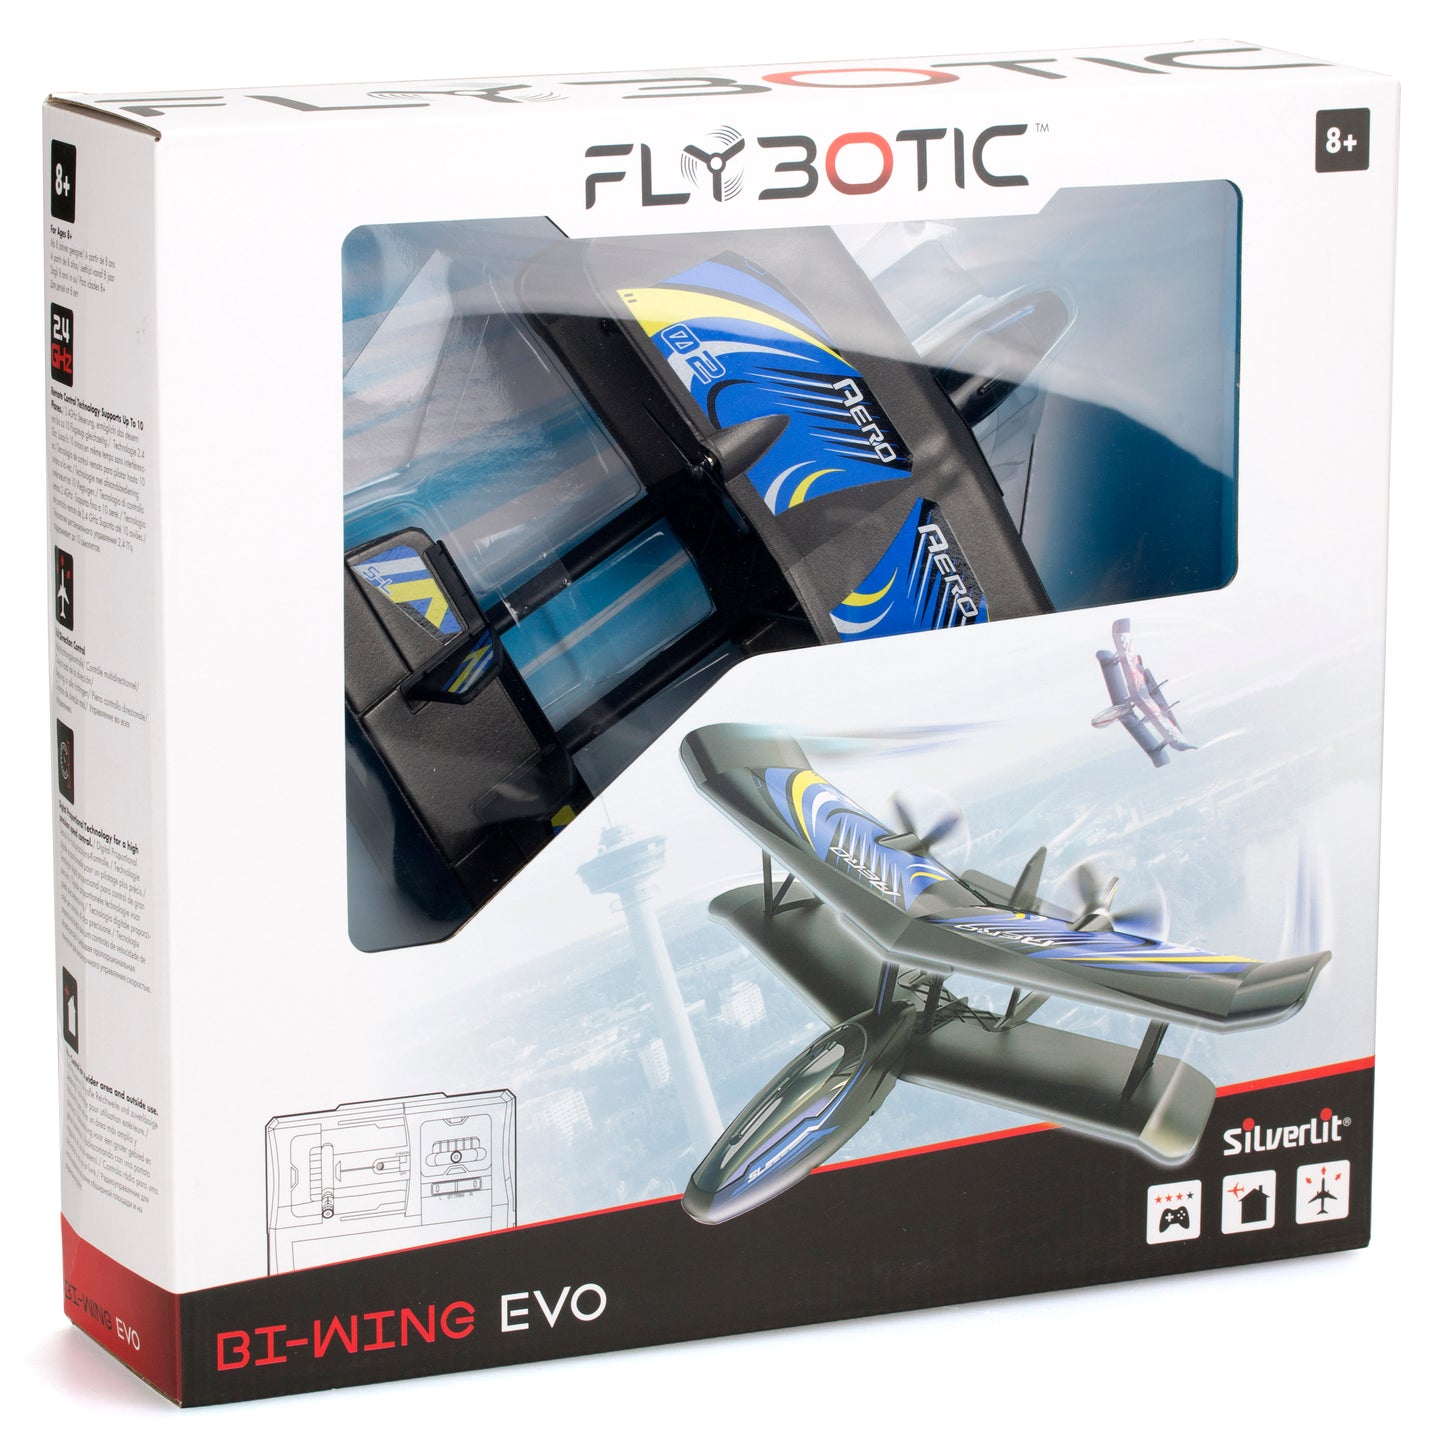 FLYBOTIC 3-Channel 2.4GHz Bi-Wing Evo RC Plane - Blue